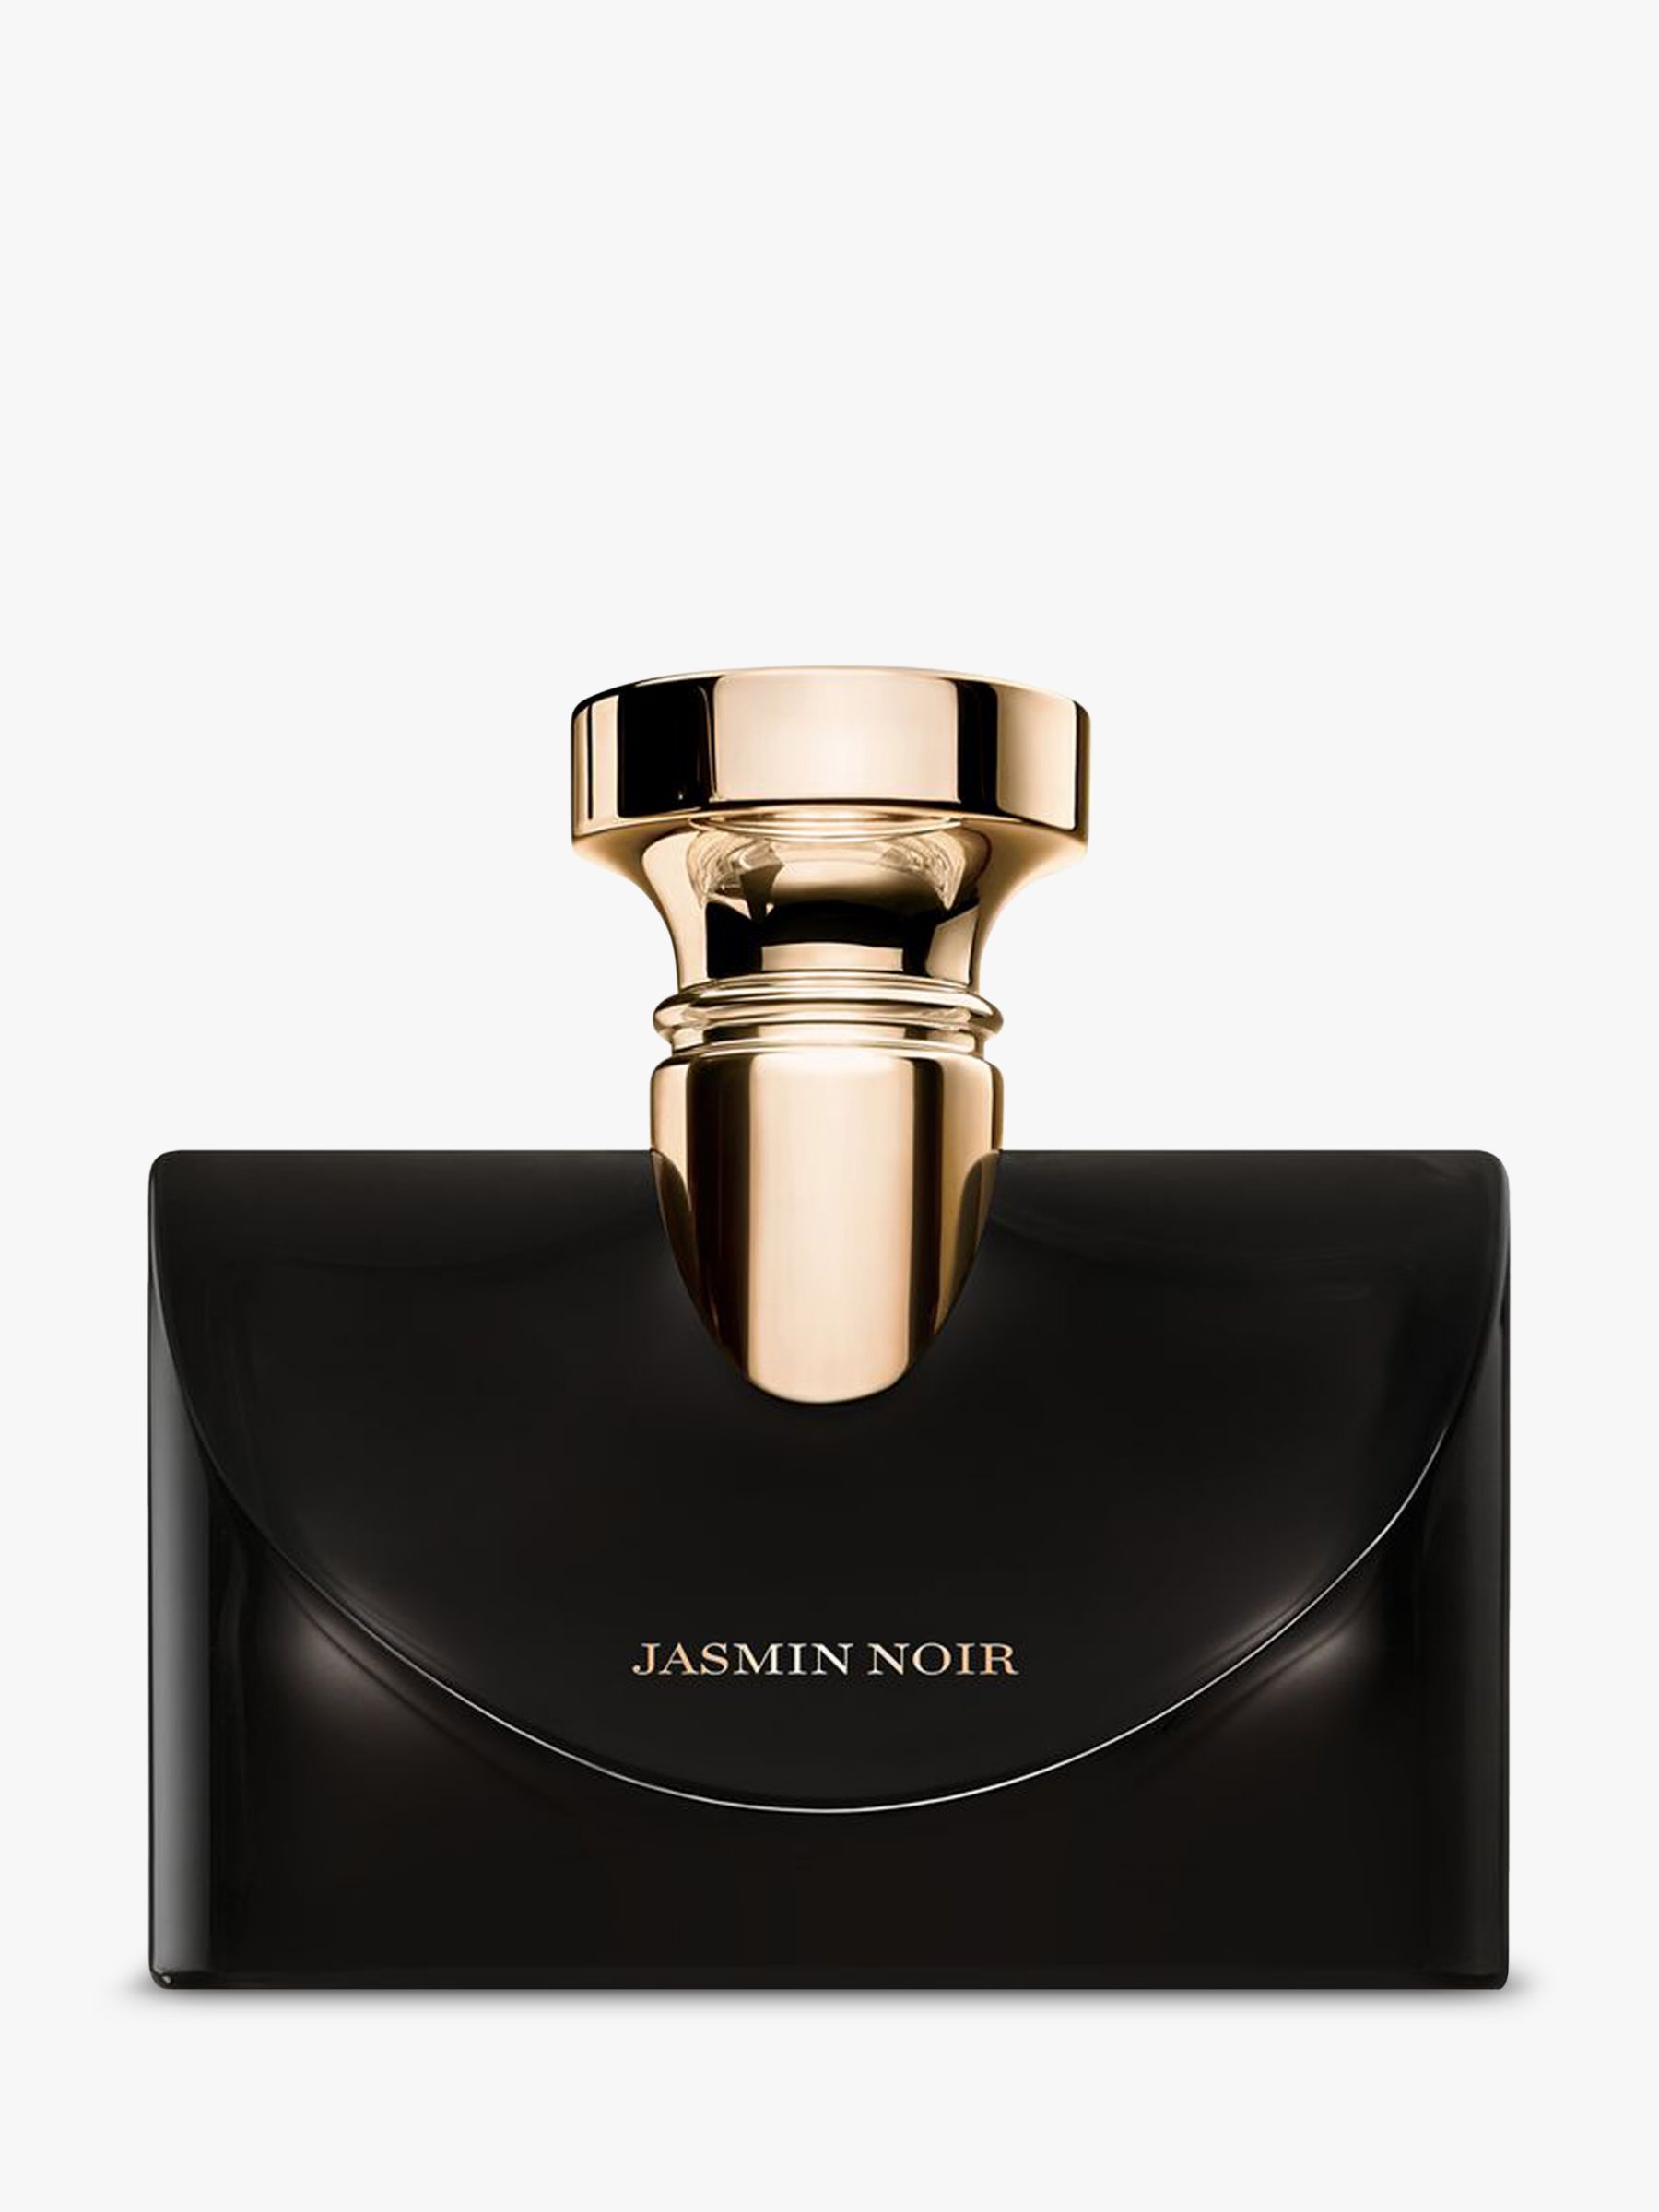 bvlgari splendida jasmin noir perfume